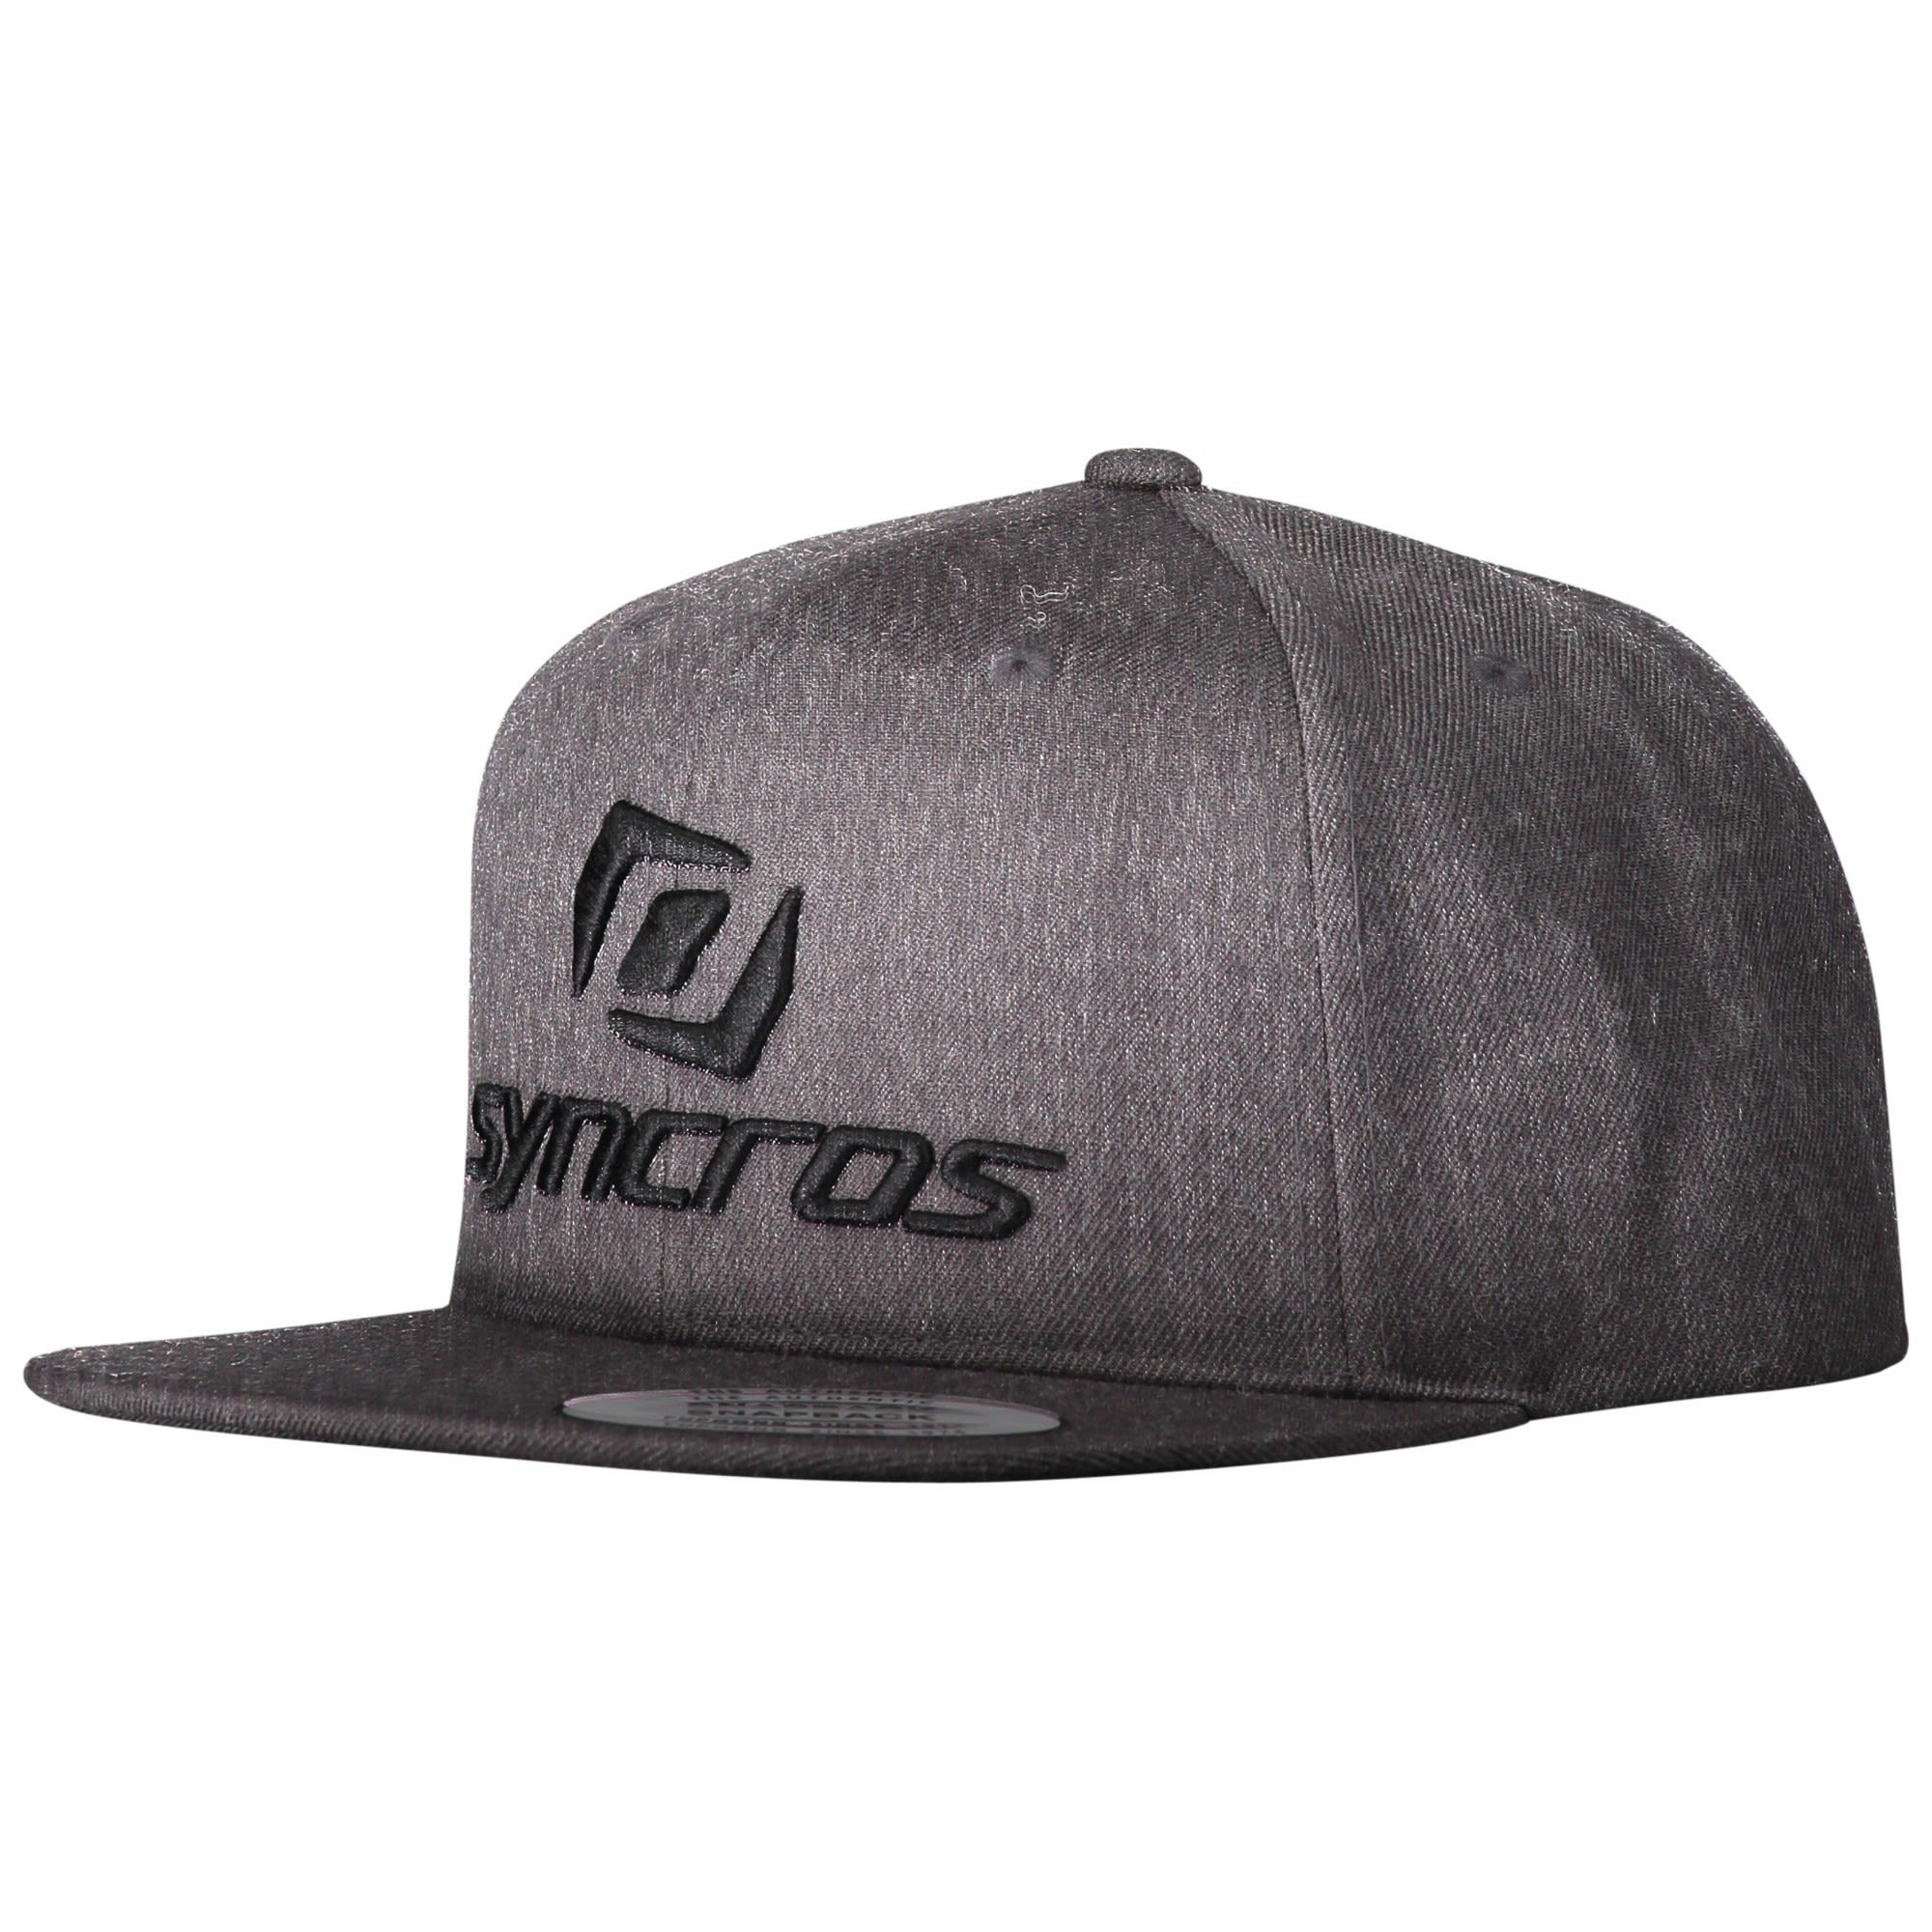 Syncros Precision Cap Grau- Kopfbedeckungen- Grsse One Size - Farbe Dark Grey Melange unter Syncros